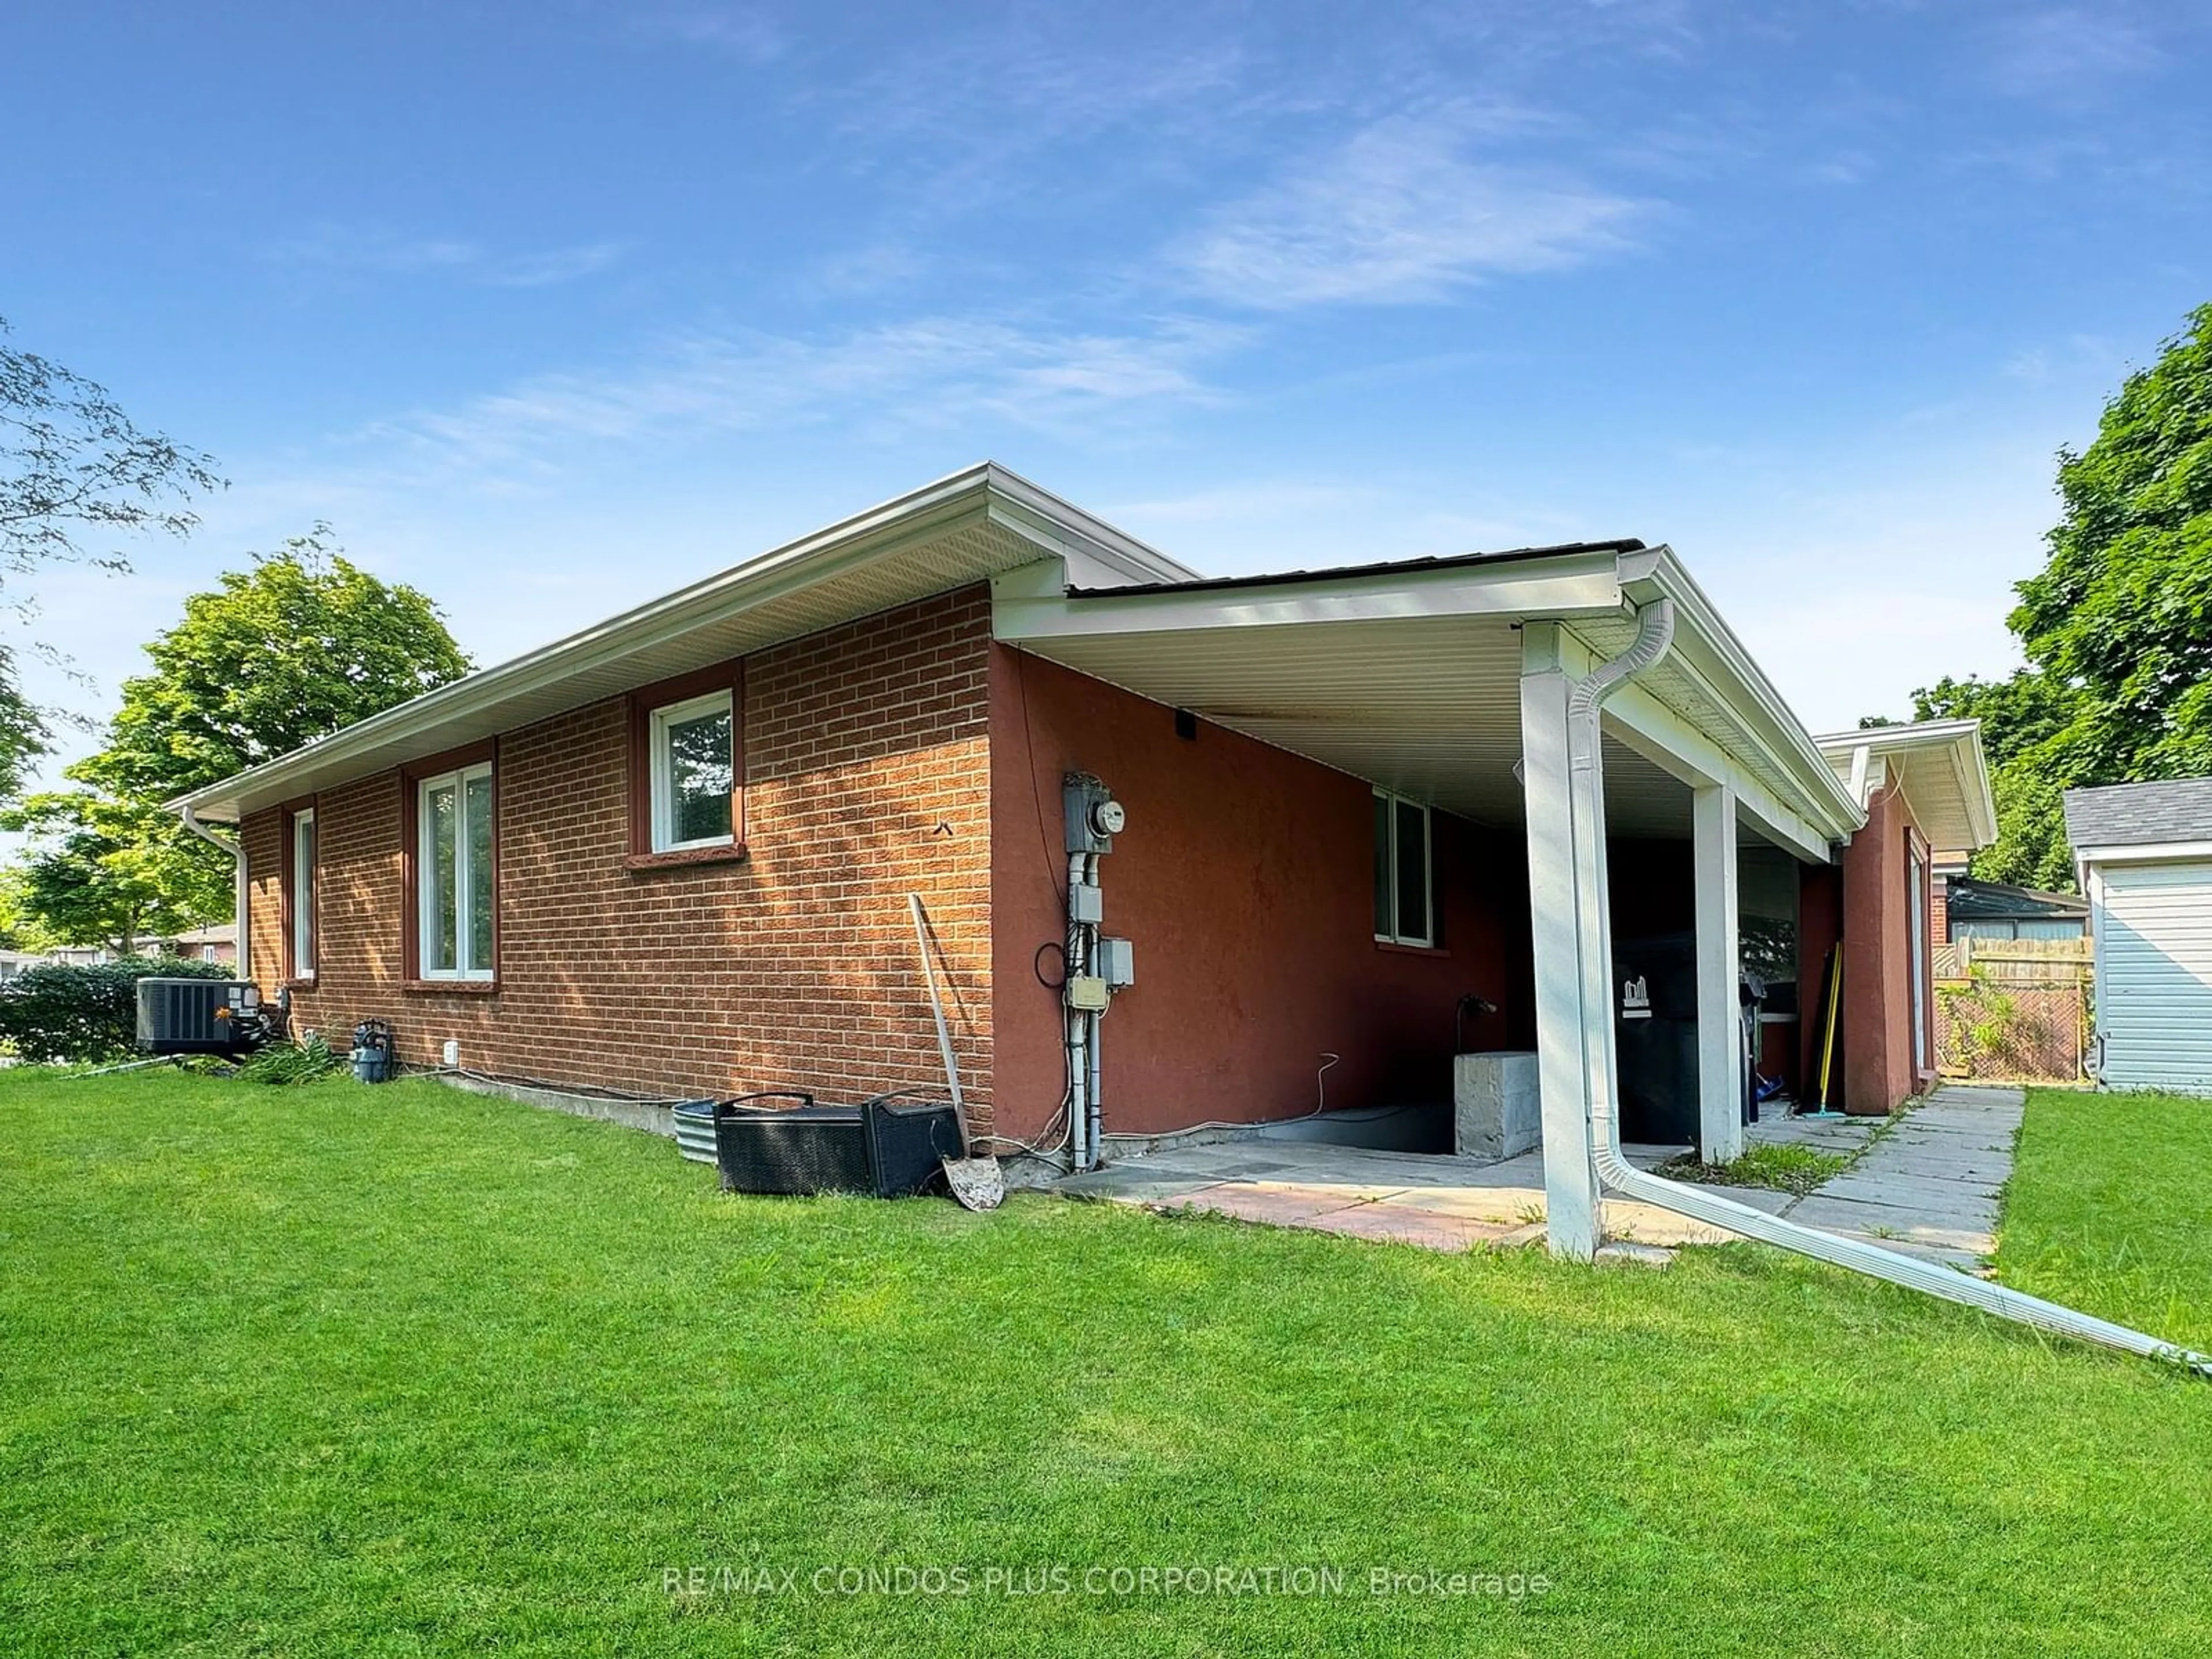 Home with brick exterior material for 82 Crow Tr, Toronto Ontario M1B 1X9